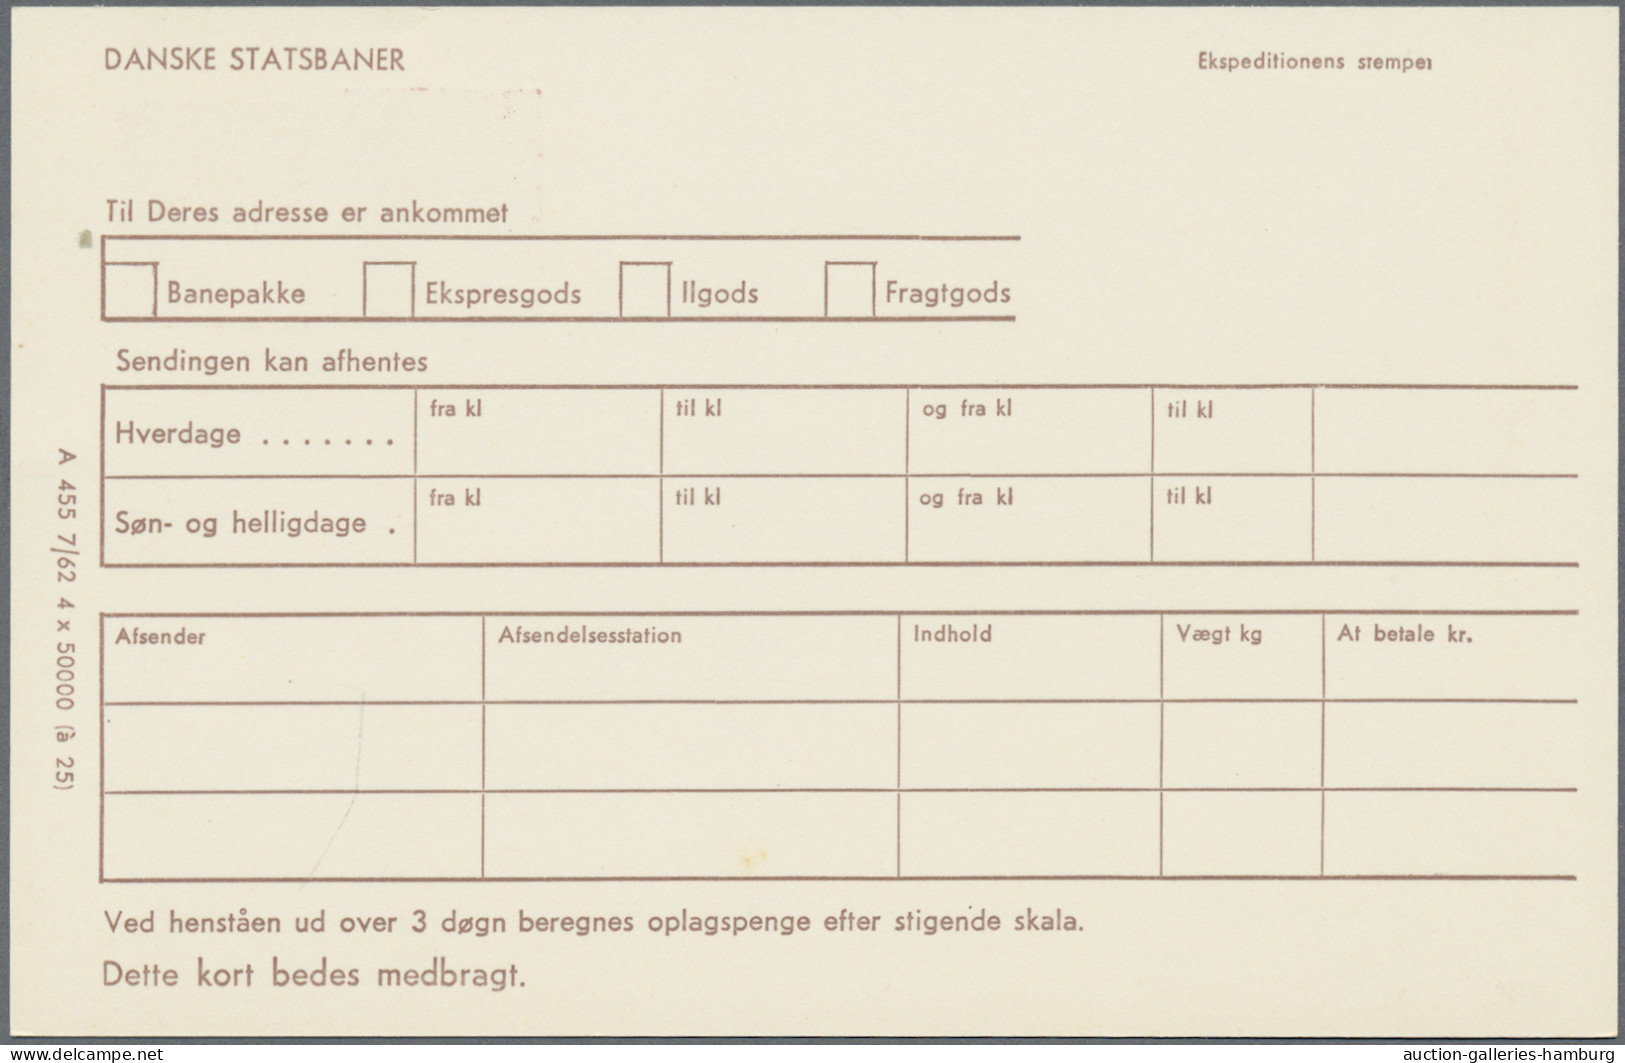 Denmark - Postal Stationery: 1920/1967 (ca.), Postal Cards Of National Railway, - Entiers Postaux